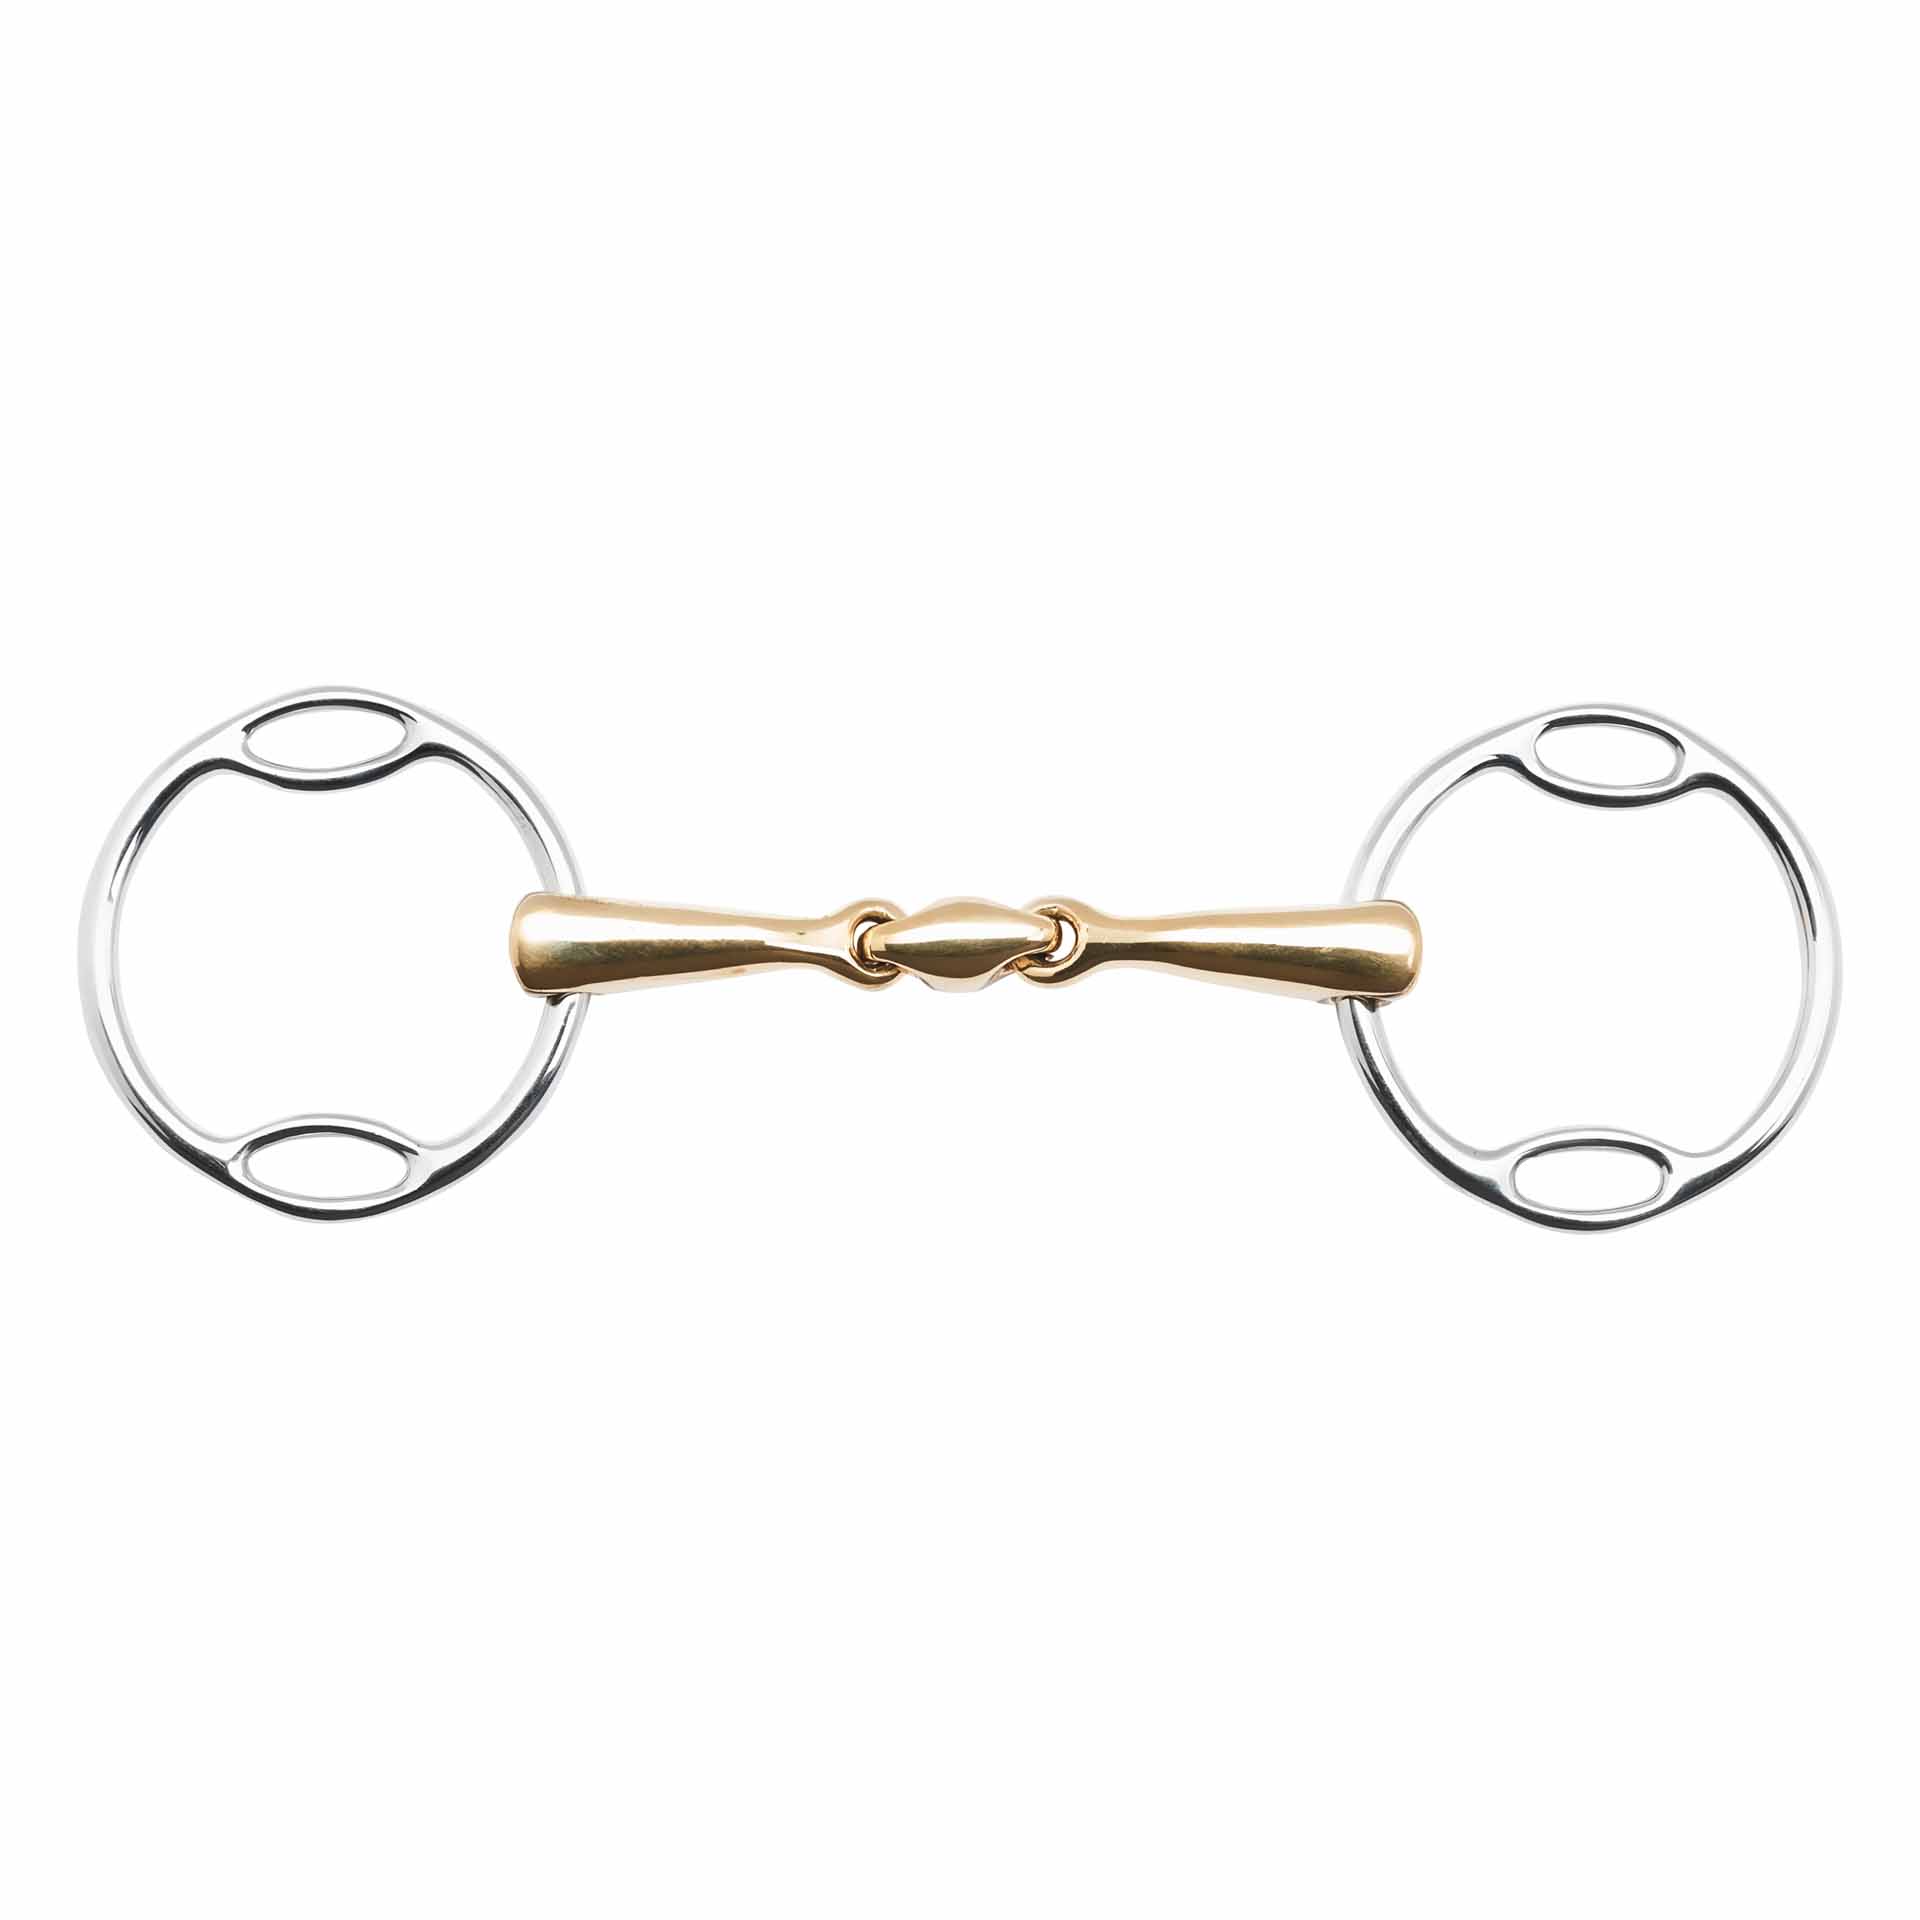 BUSSE Soft-Ring Snaffle Bit KAUGAN®-SHAPED, 14 mm, Frech-Link 11.5 cm/60 mm 